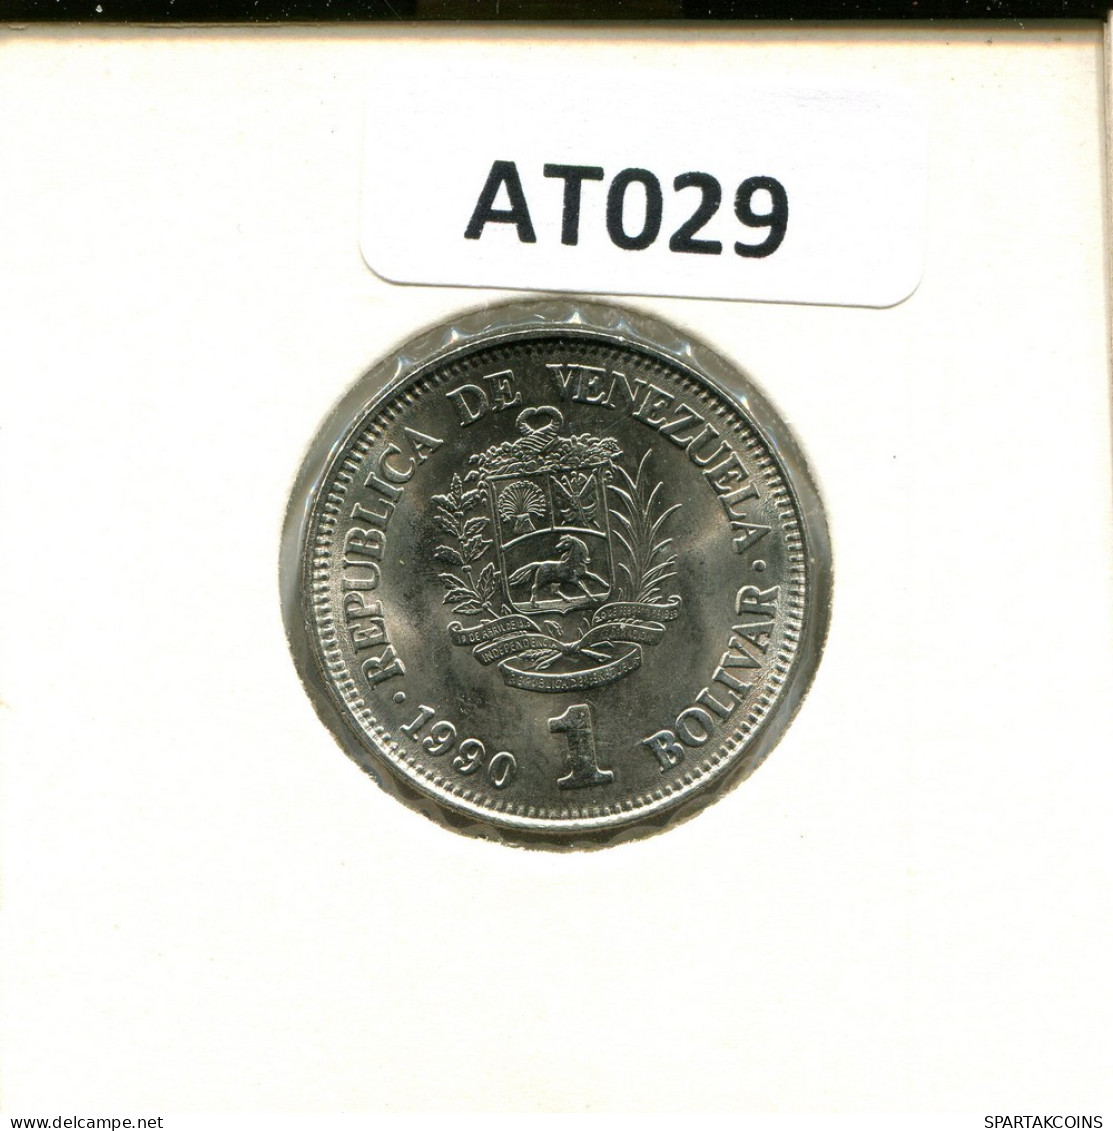 1 BOLIVAR 1990 VENEZUELA Coin #AT029.U.A - Venezuela